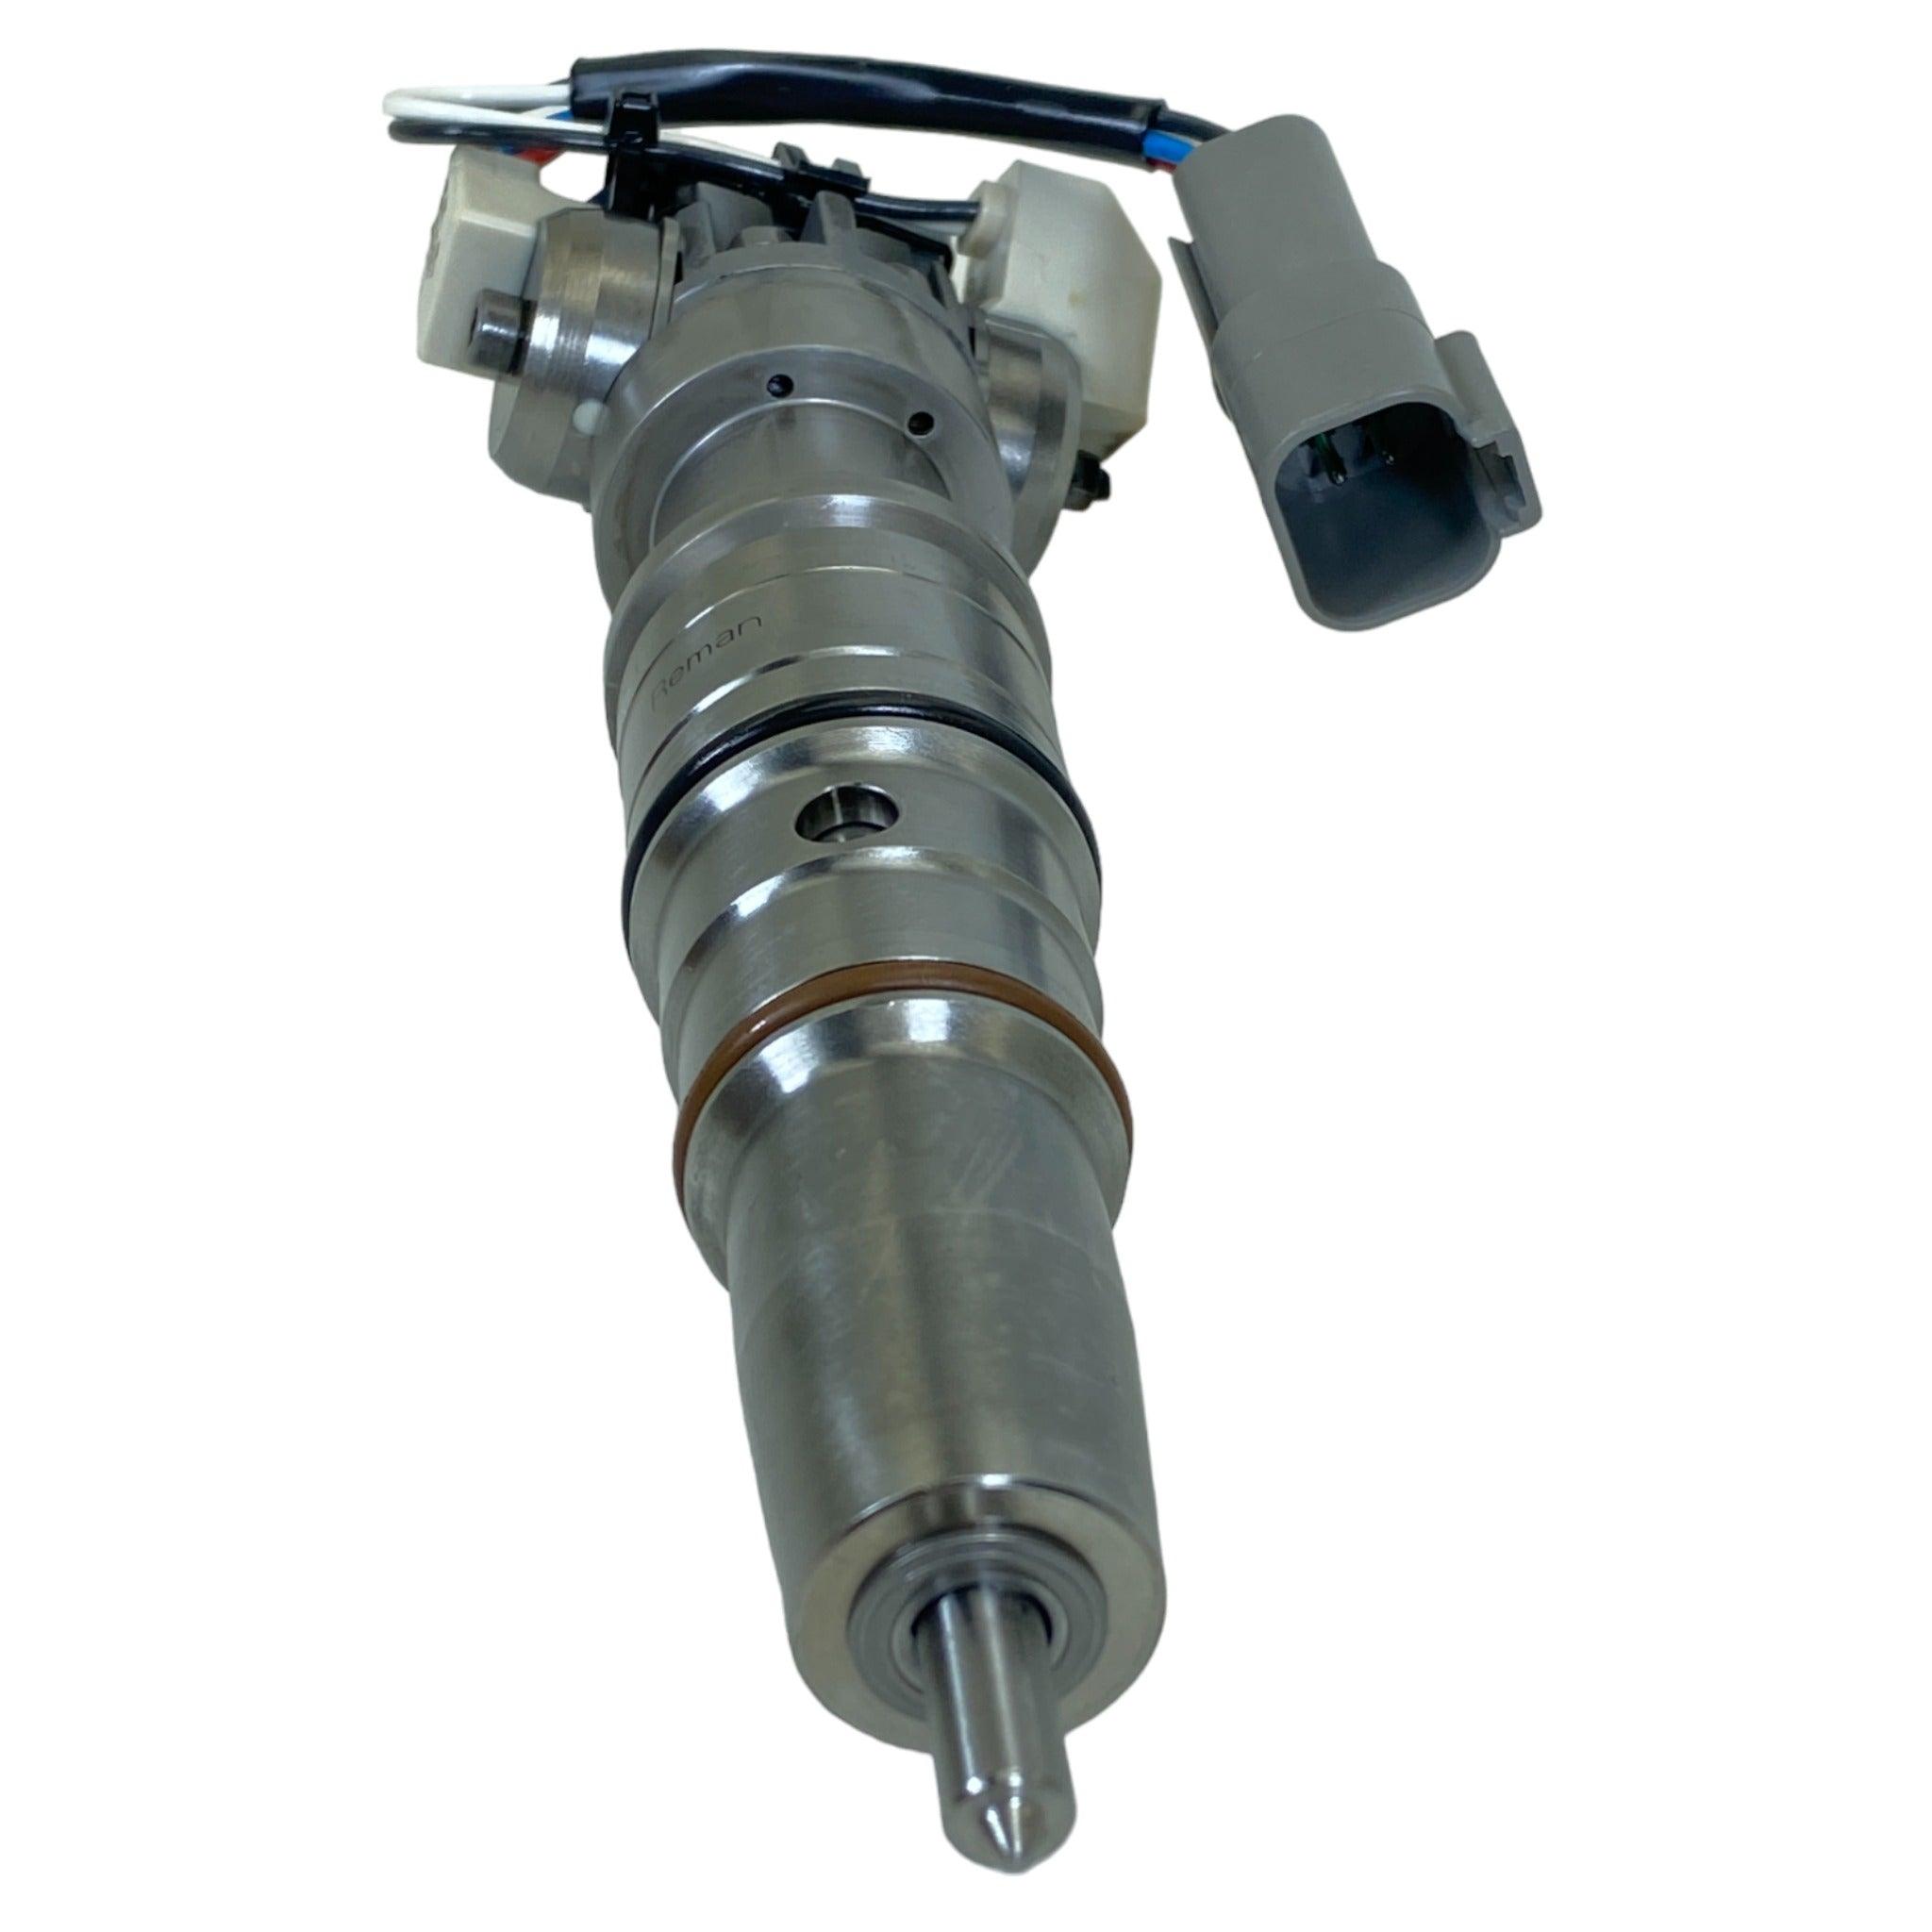 5010823R91 Genuine International® Injector For Navistar Dt466 - ADVANCED TRUCK PARTS